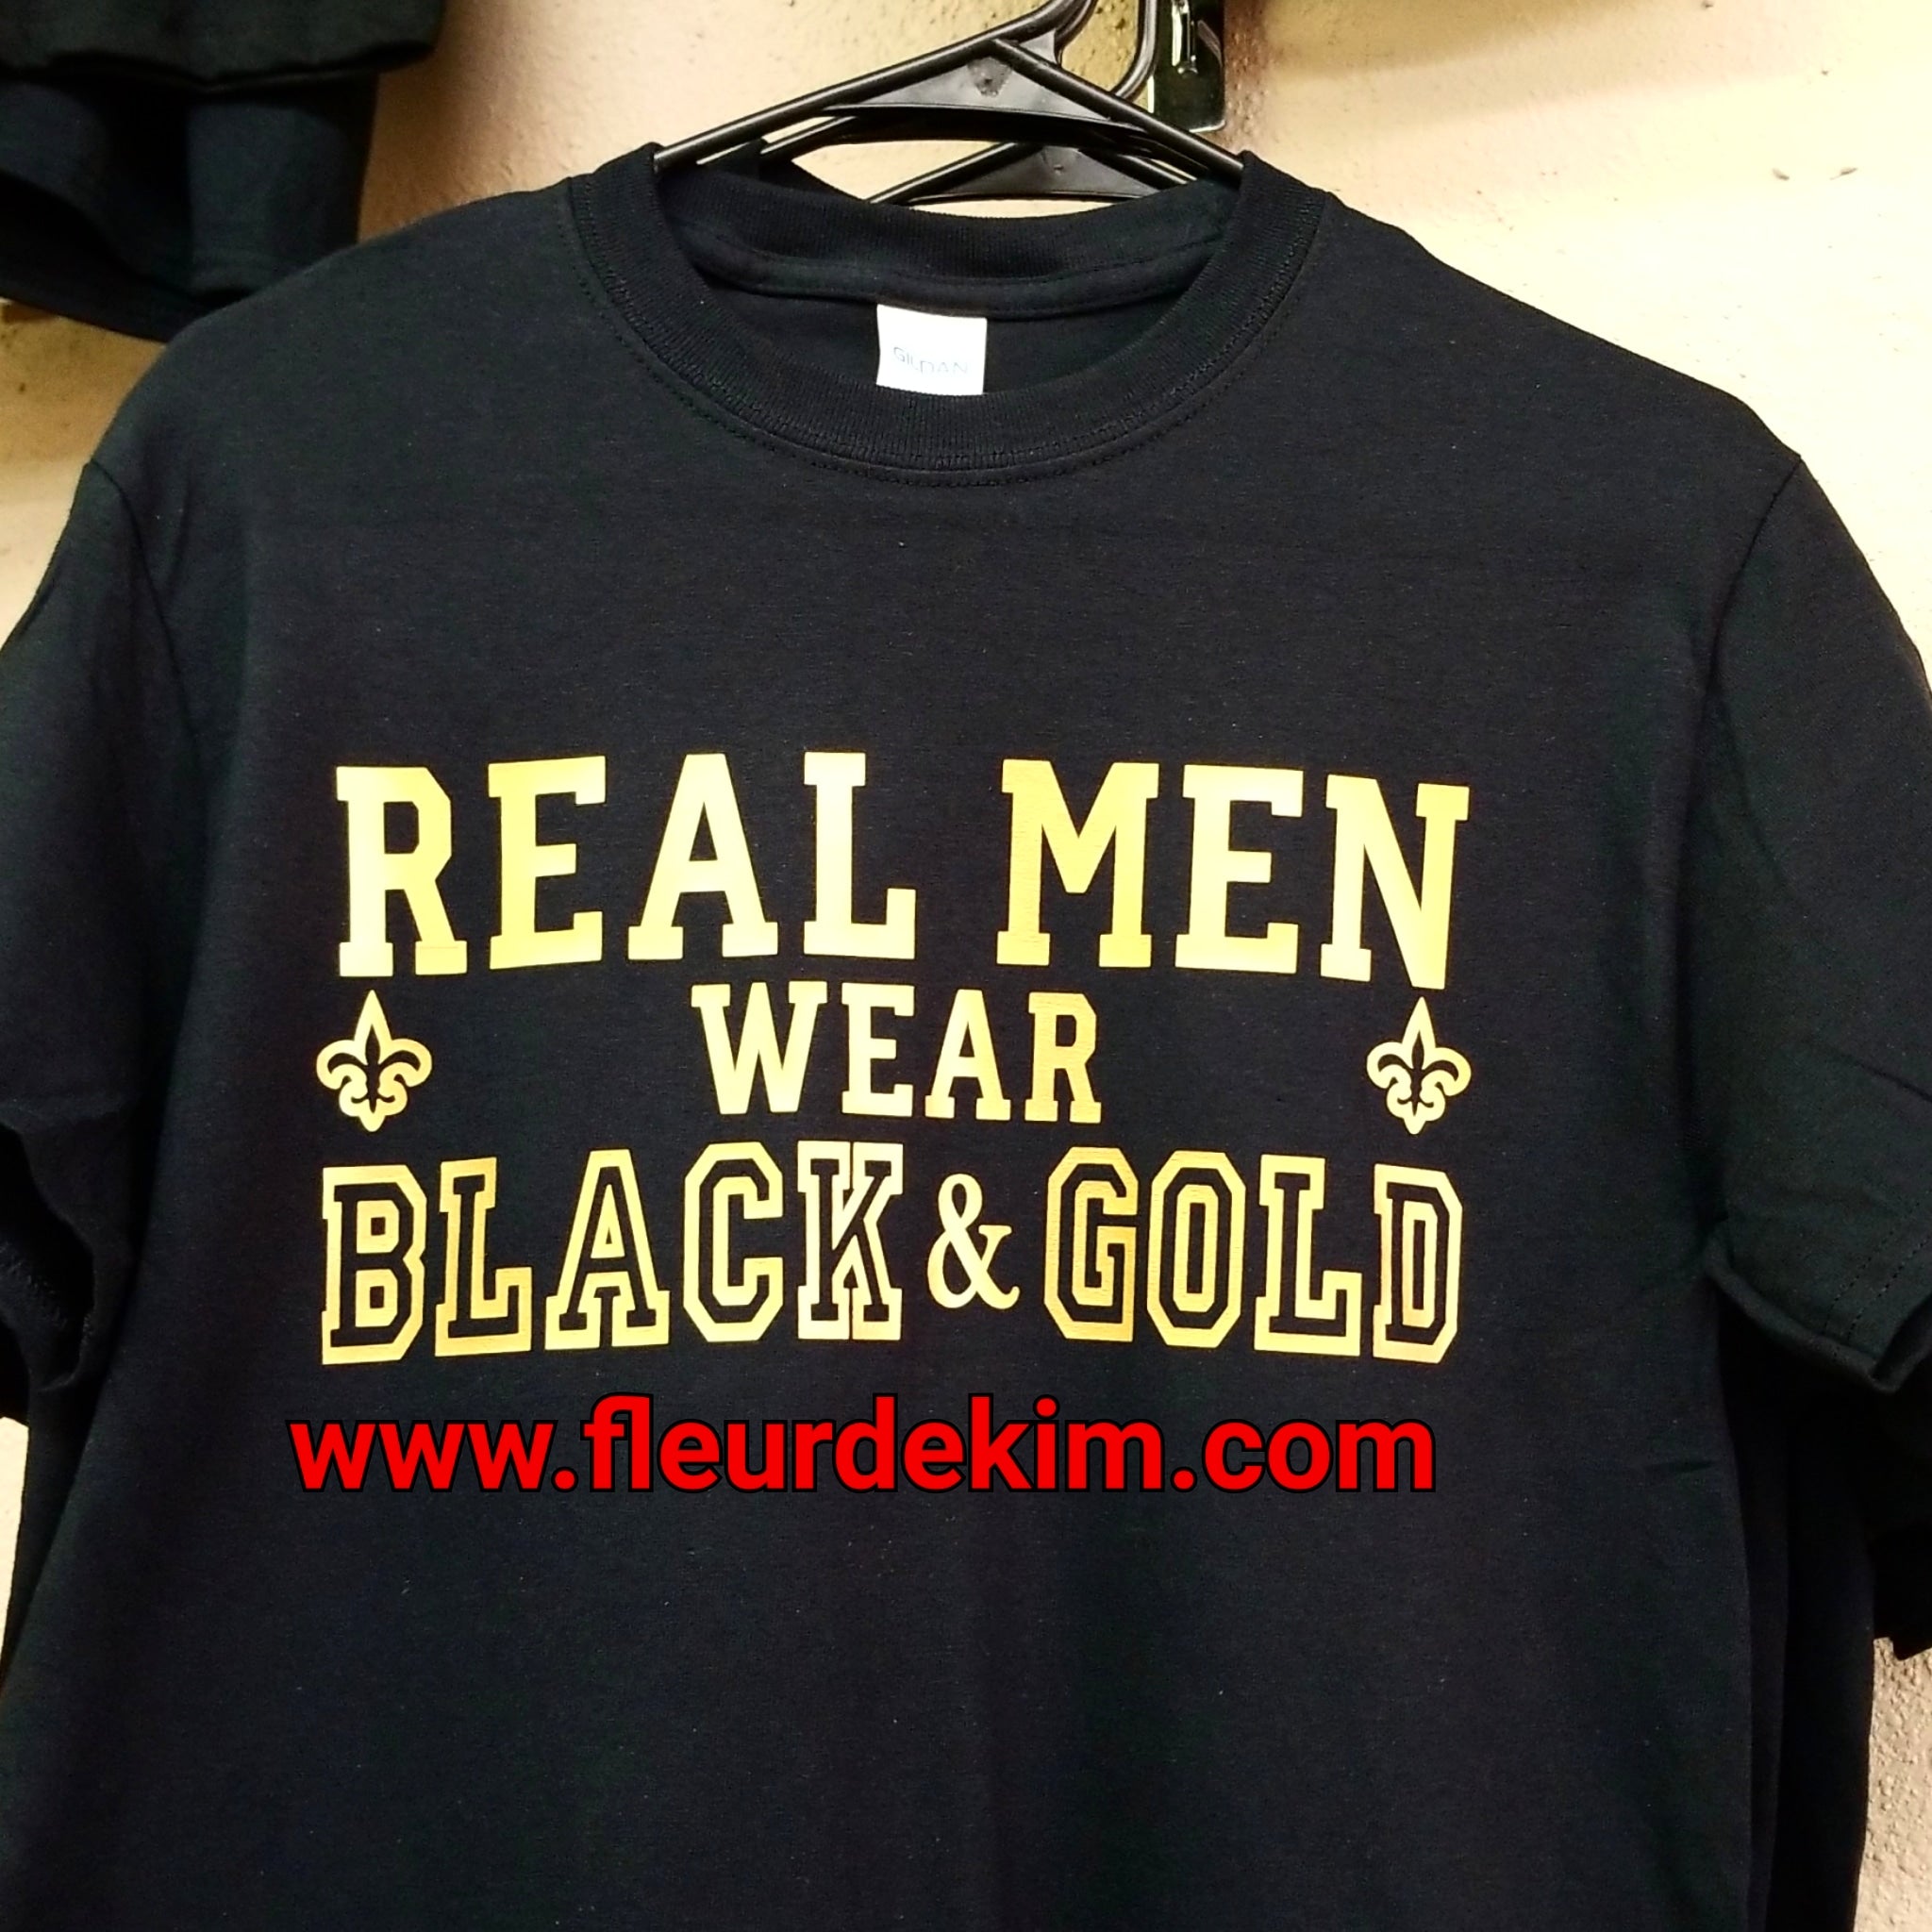 "Real Men" wear black & gold tshirt